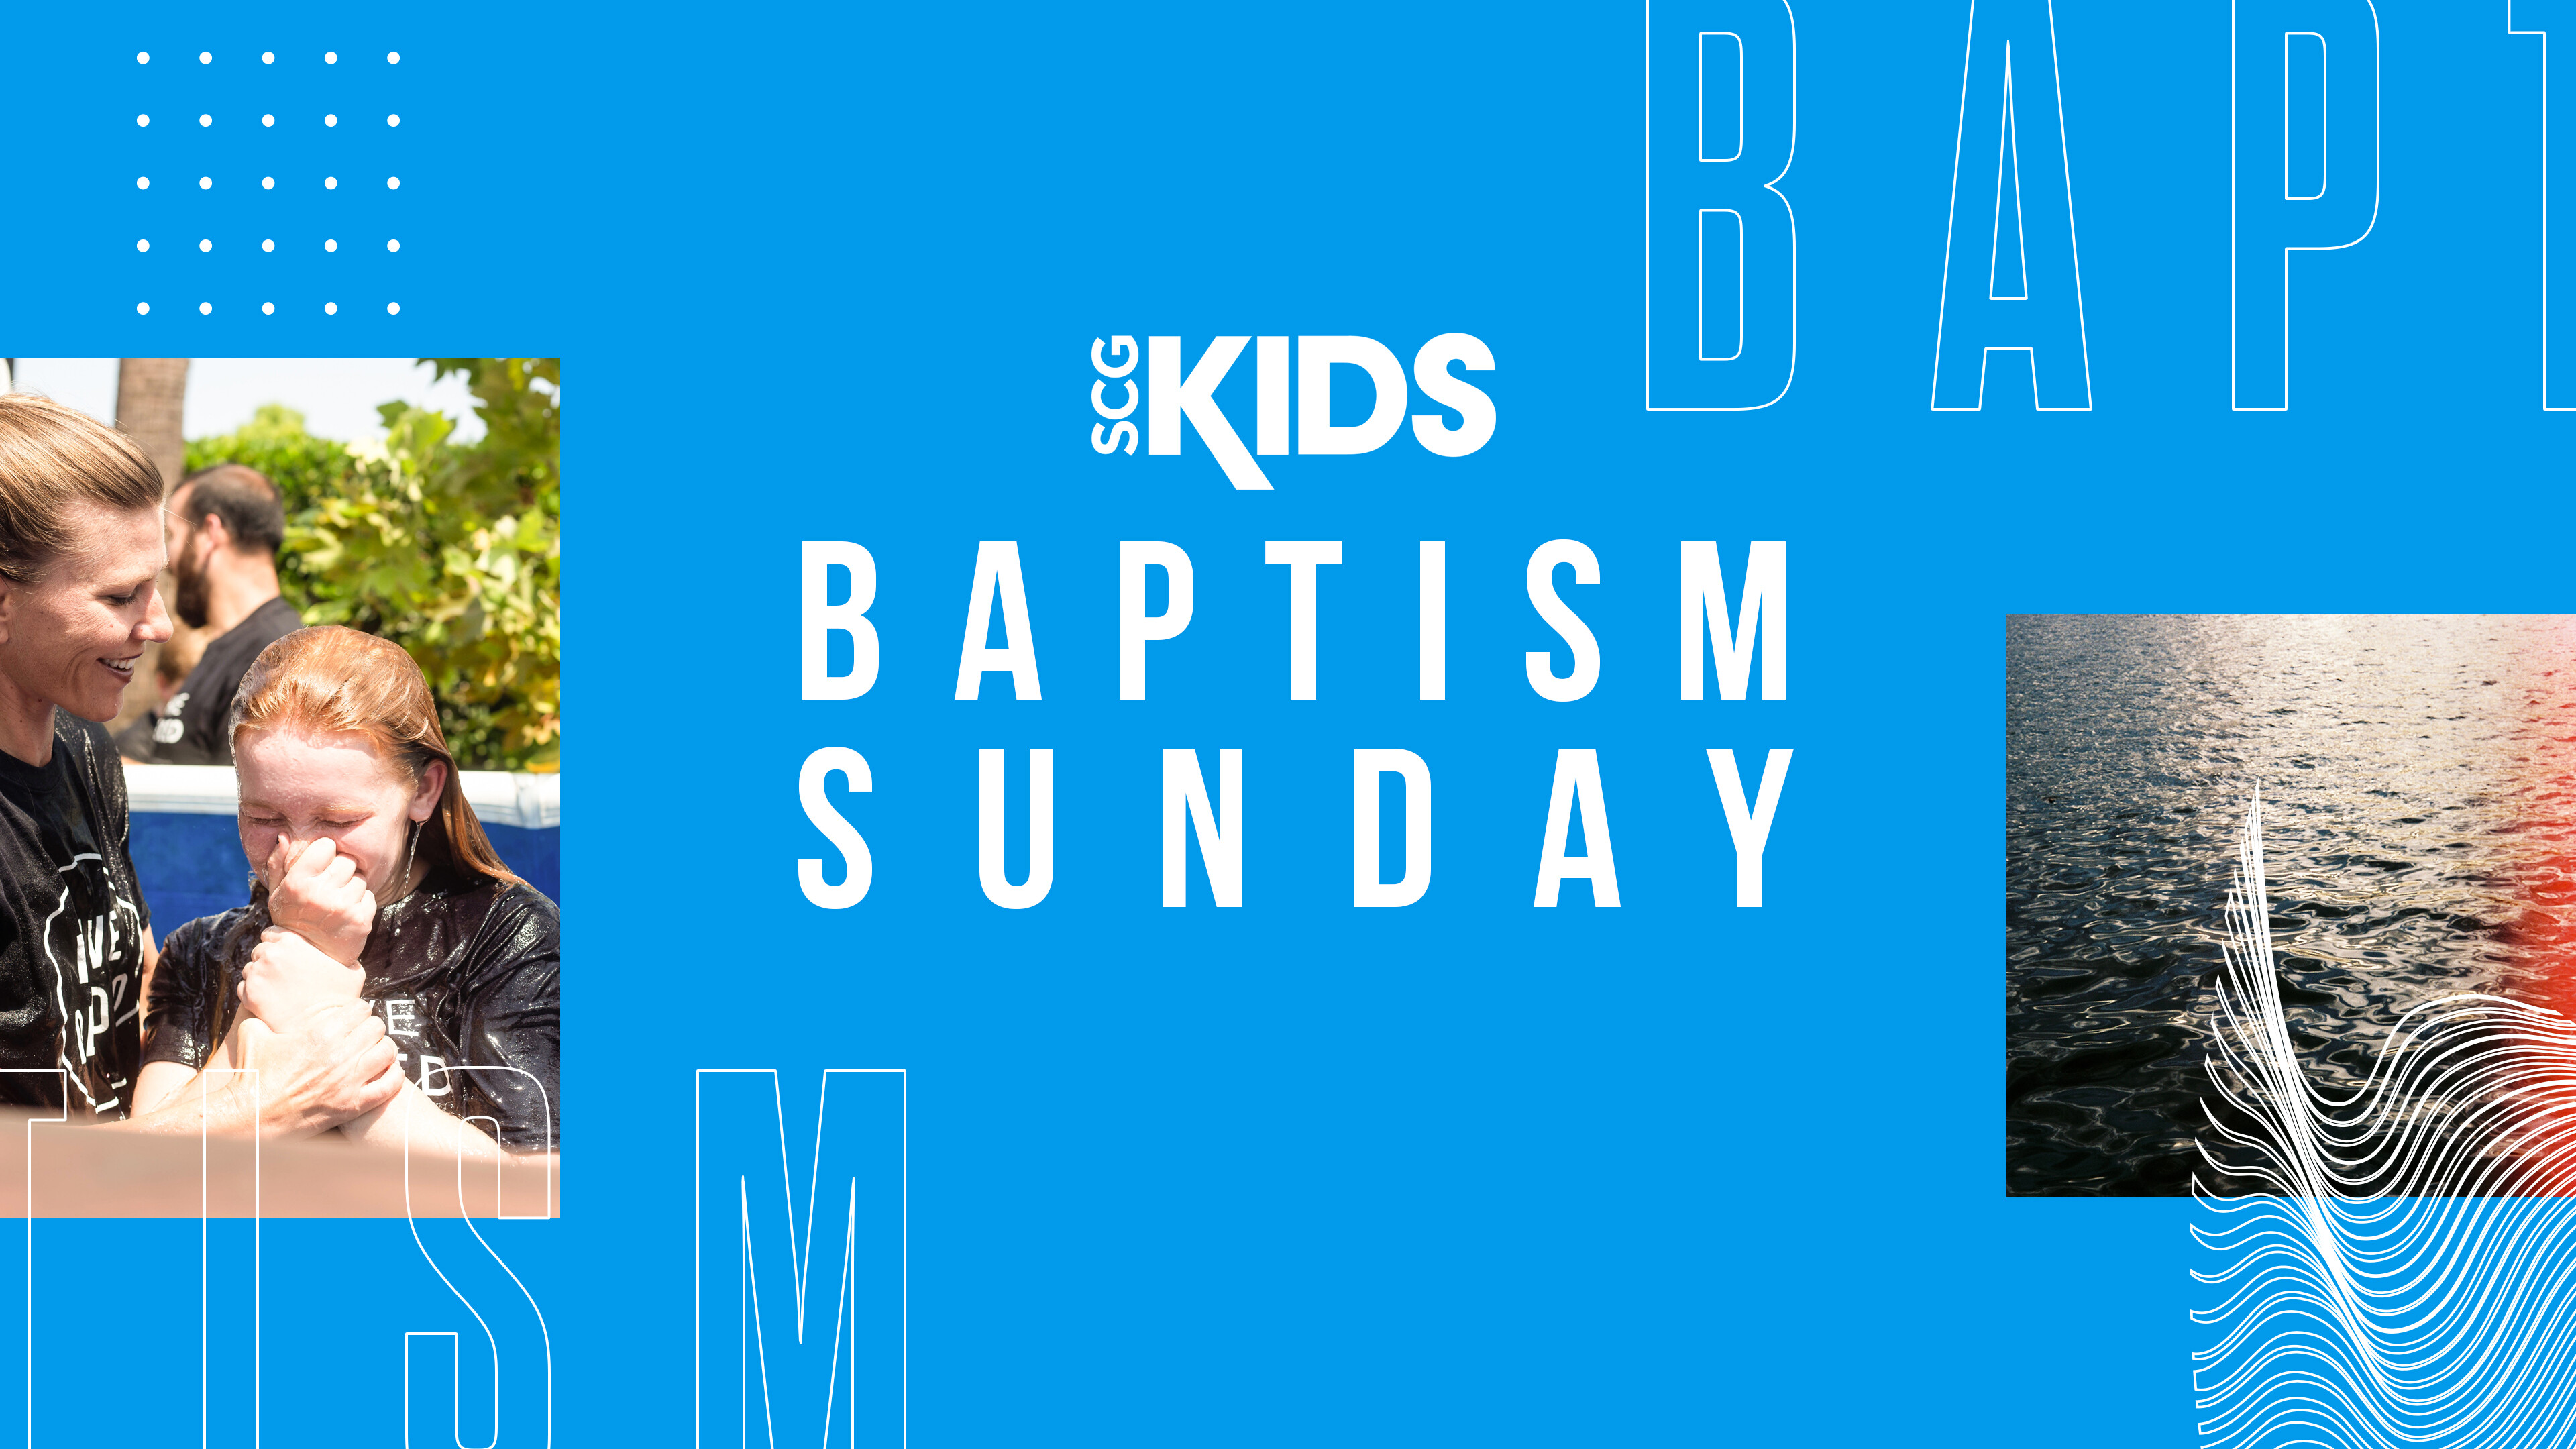 KIDS BAPTISM